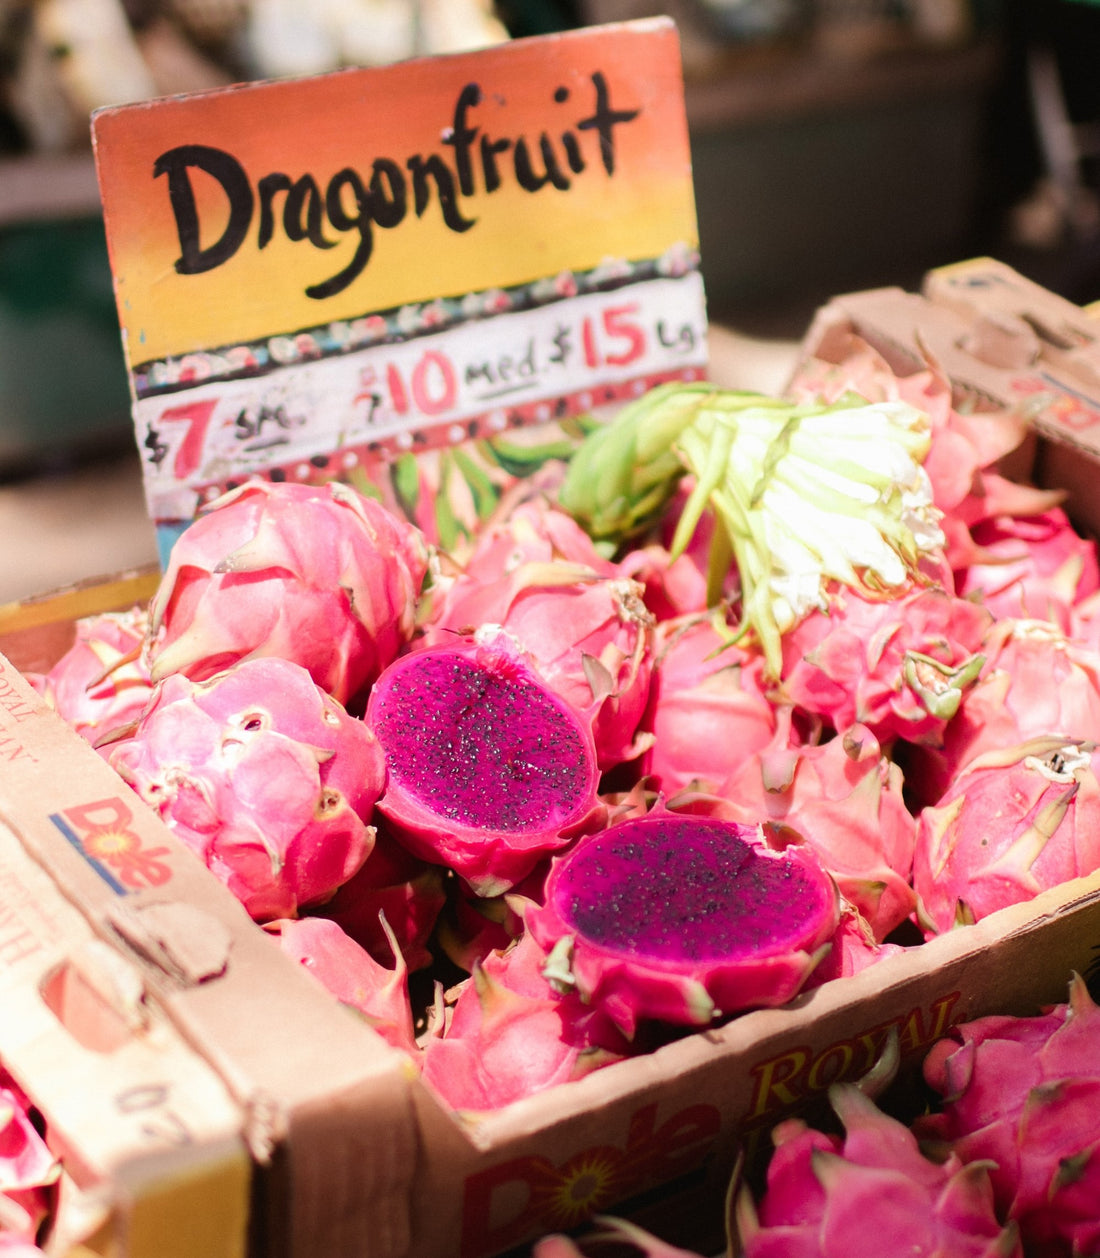 Dragonfruit Pink Pitaya In Market For Sale